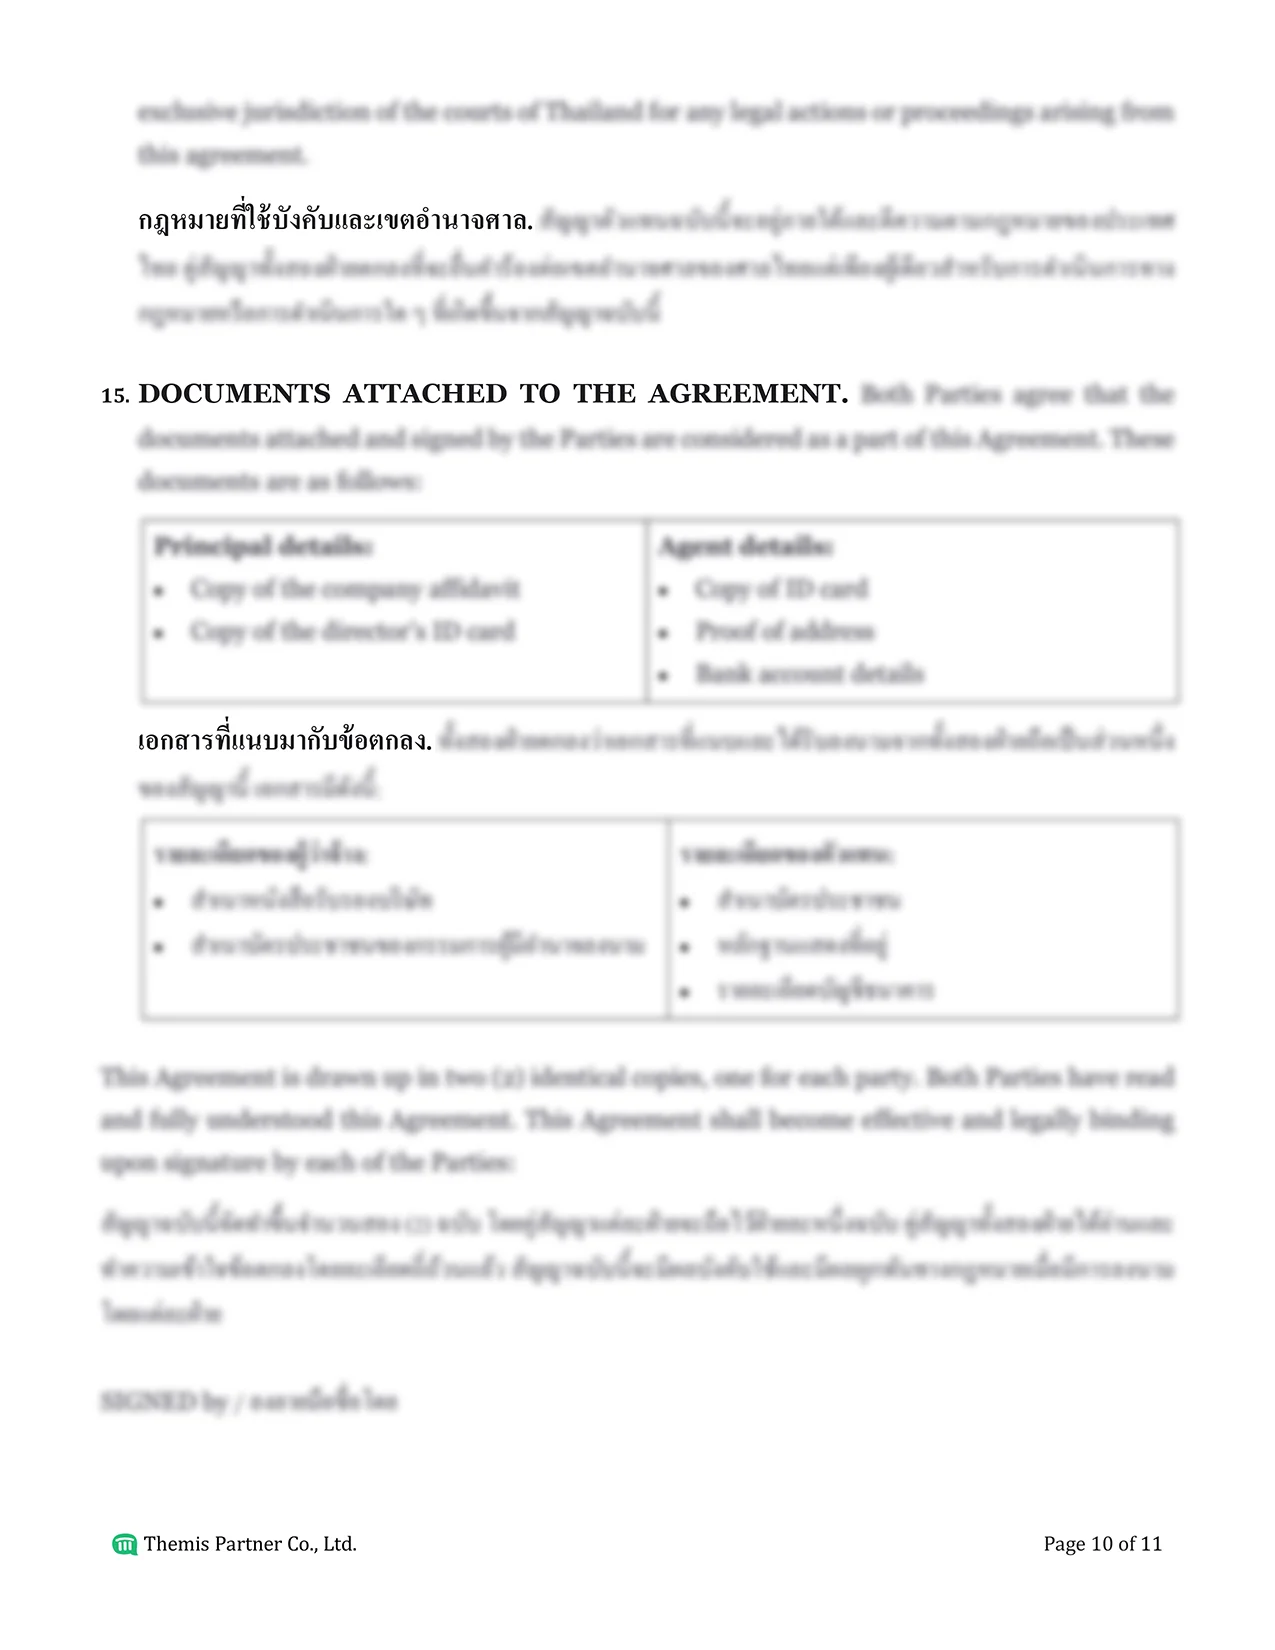 Agency agreement Thailand 10